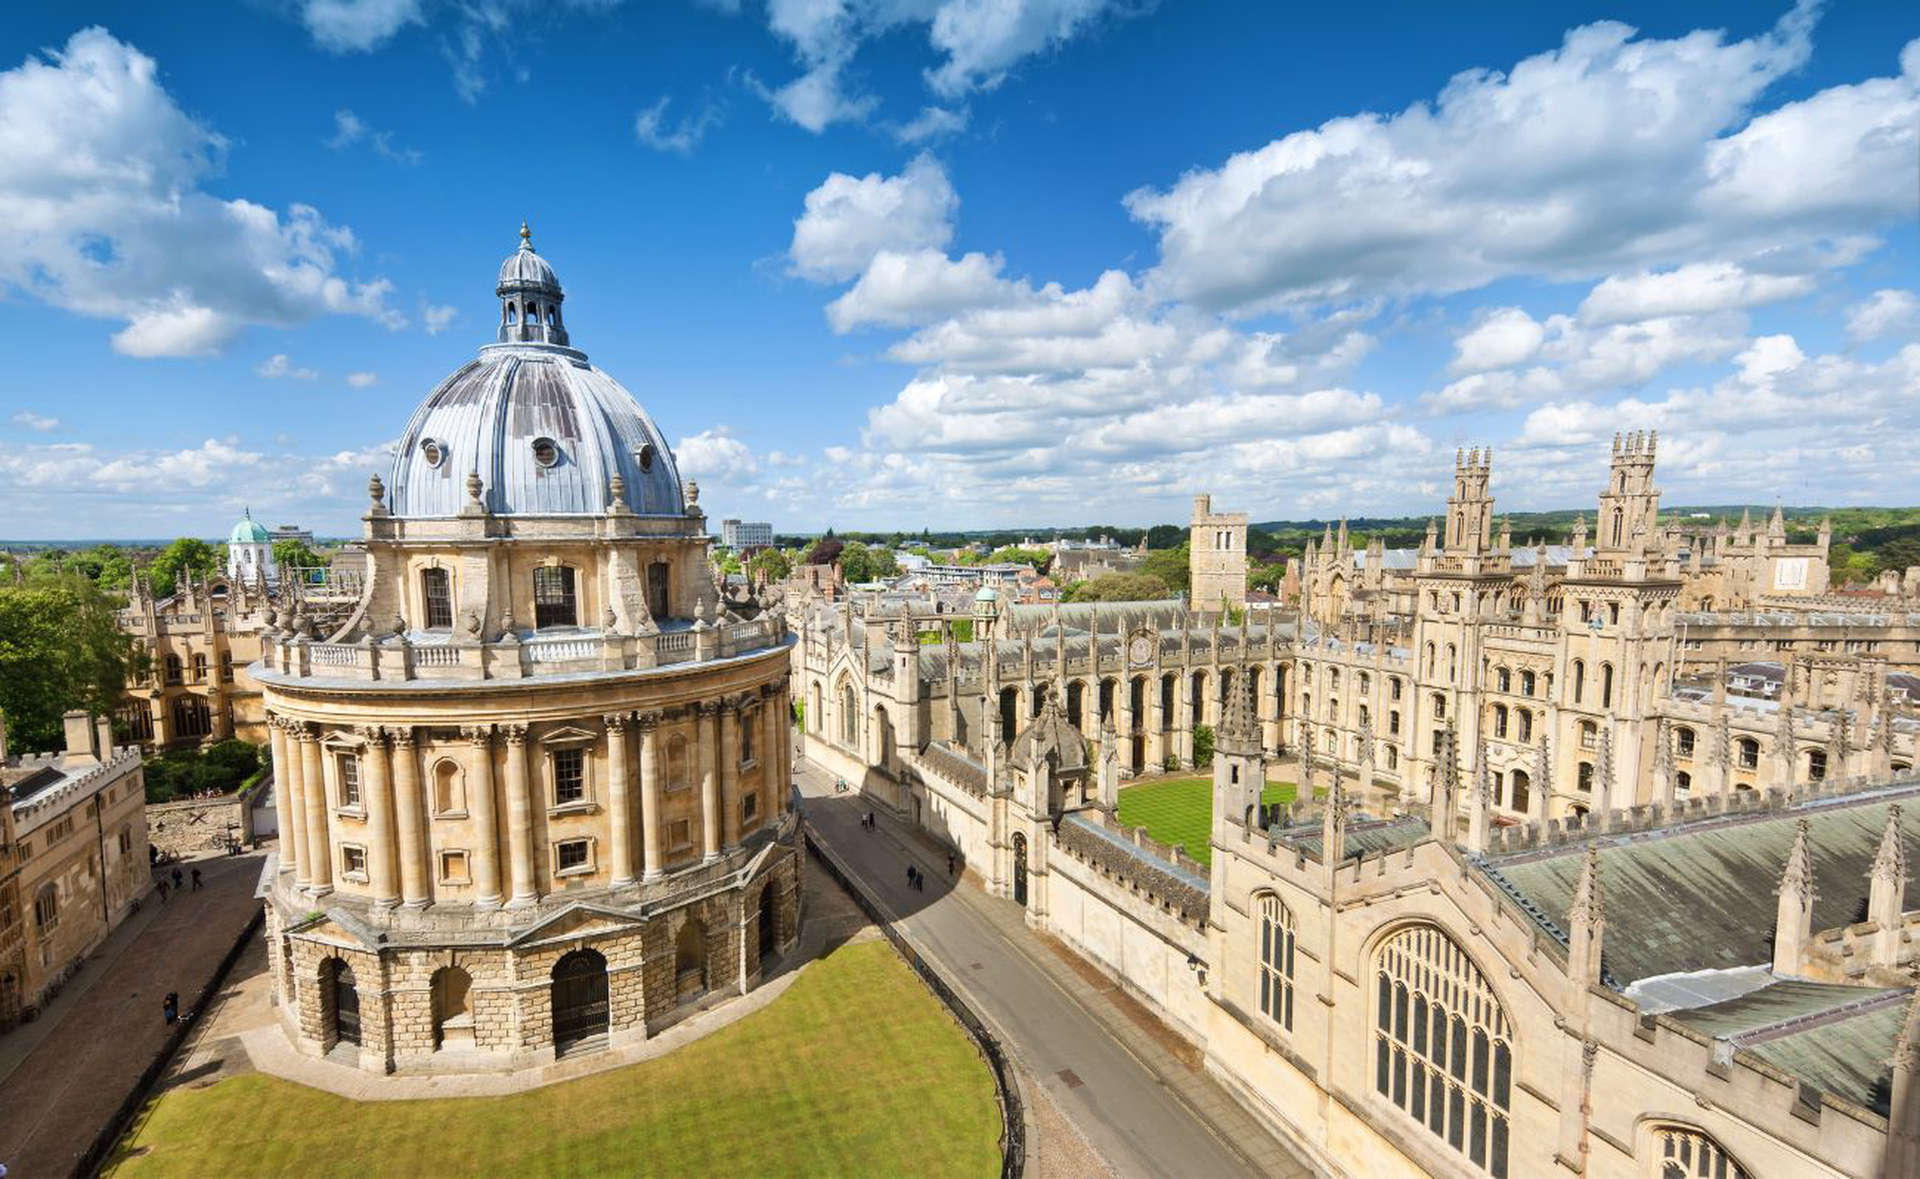 Università di Oxford, Christ Church College